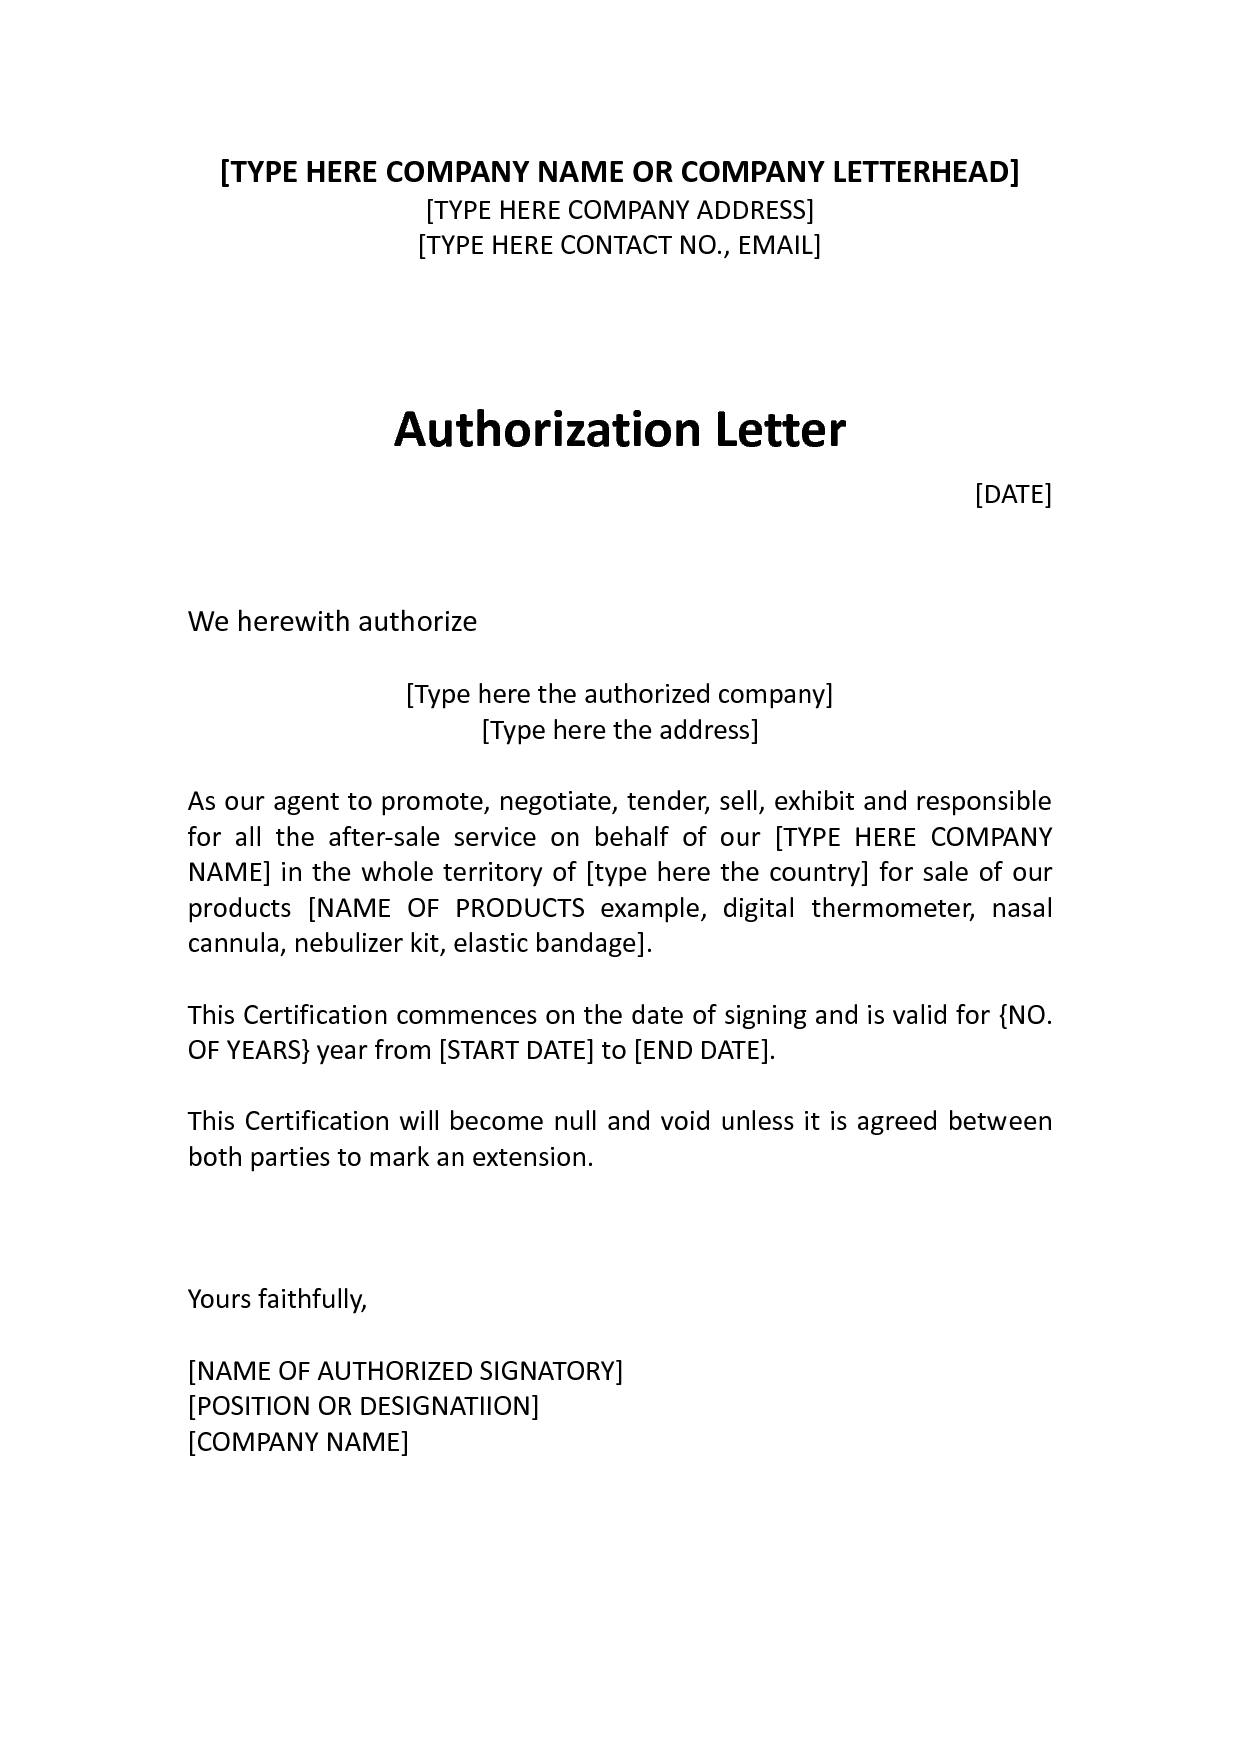 Notarized Letter Template Word - Authorization Distributor Letter Sample Distributor Dealer